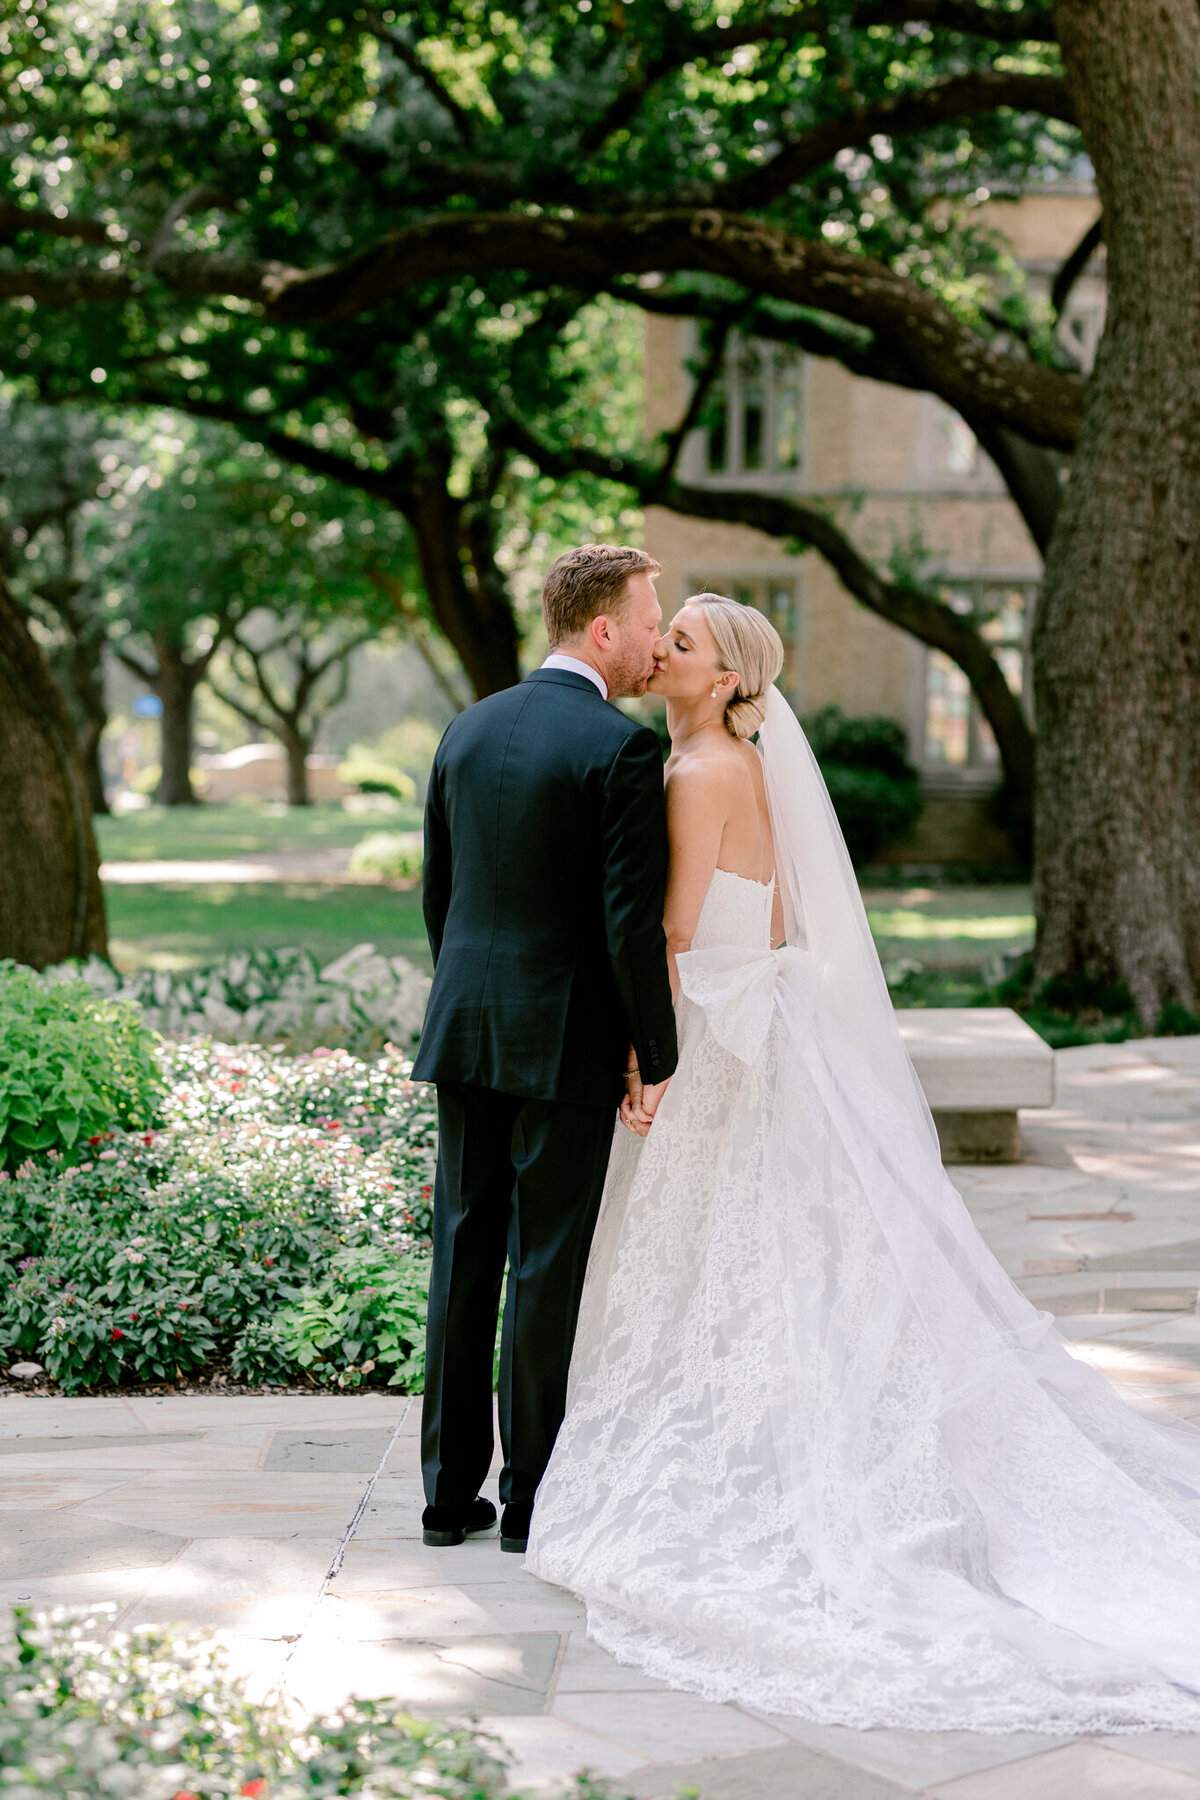 Katelyn & Kyle's Wedding at the Adolphus Hotel | Dallas Wedding Photographer | Sami Kathryn Photography-5